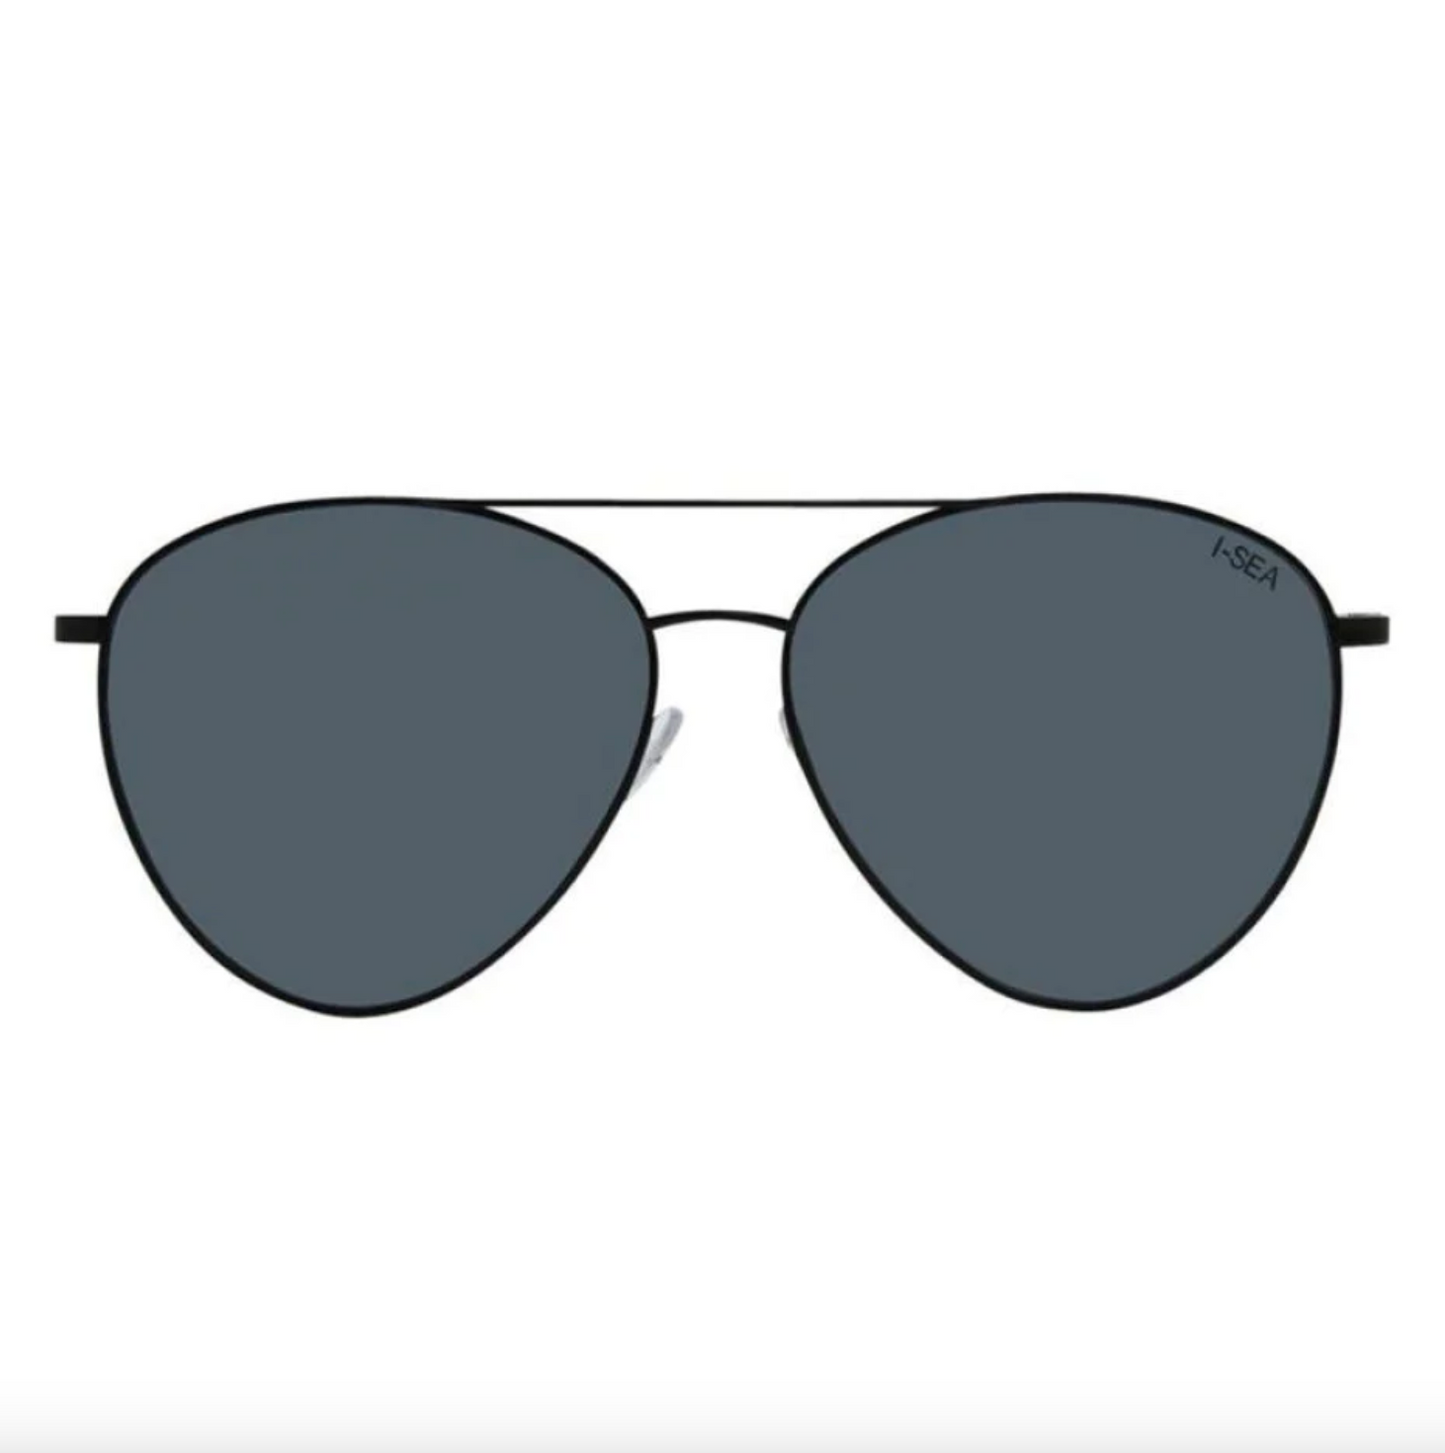 I-Sea Charlie Sunglasses Sunglasses in  at Wrapsody